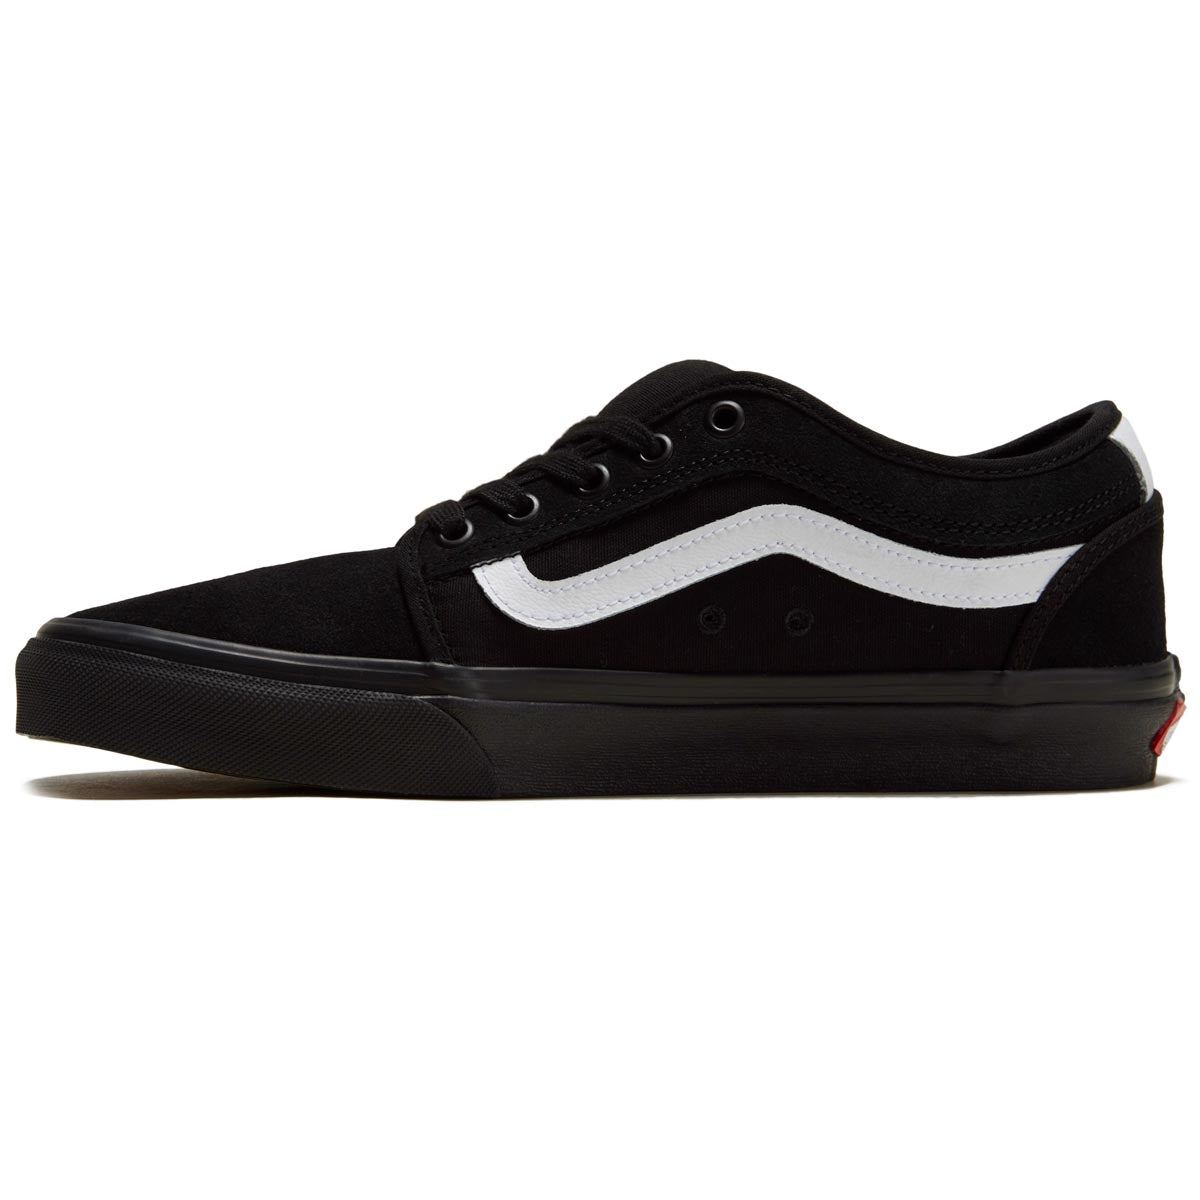 Vans Chukka Low Sidestripe Shoes - Black/Black/White image 2